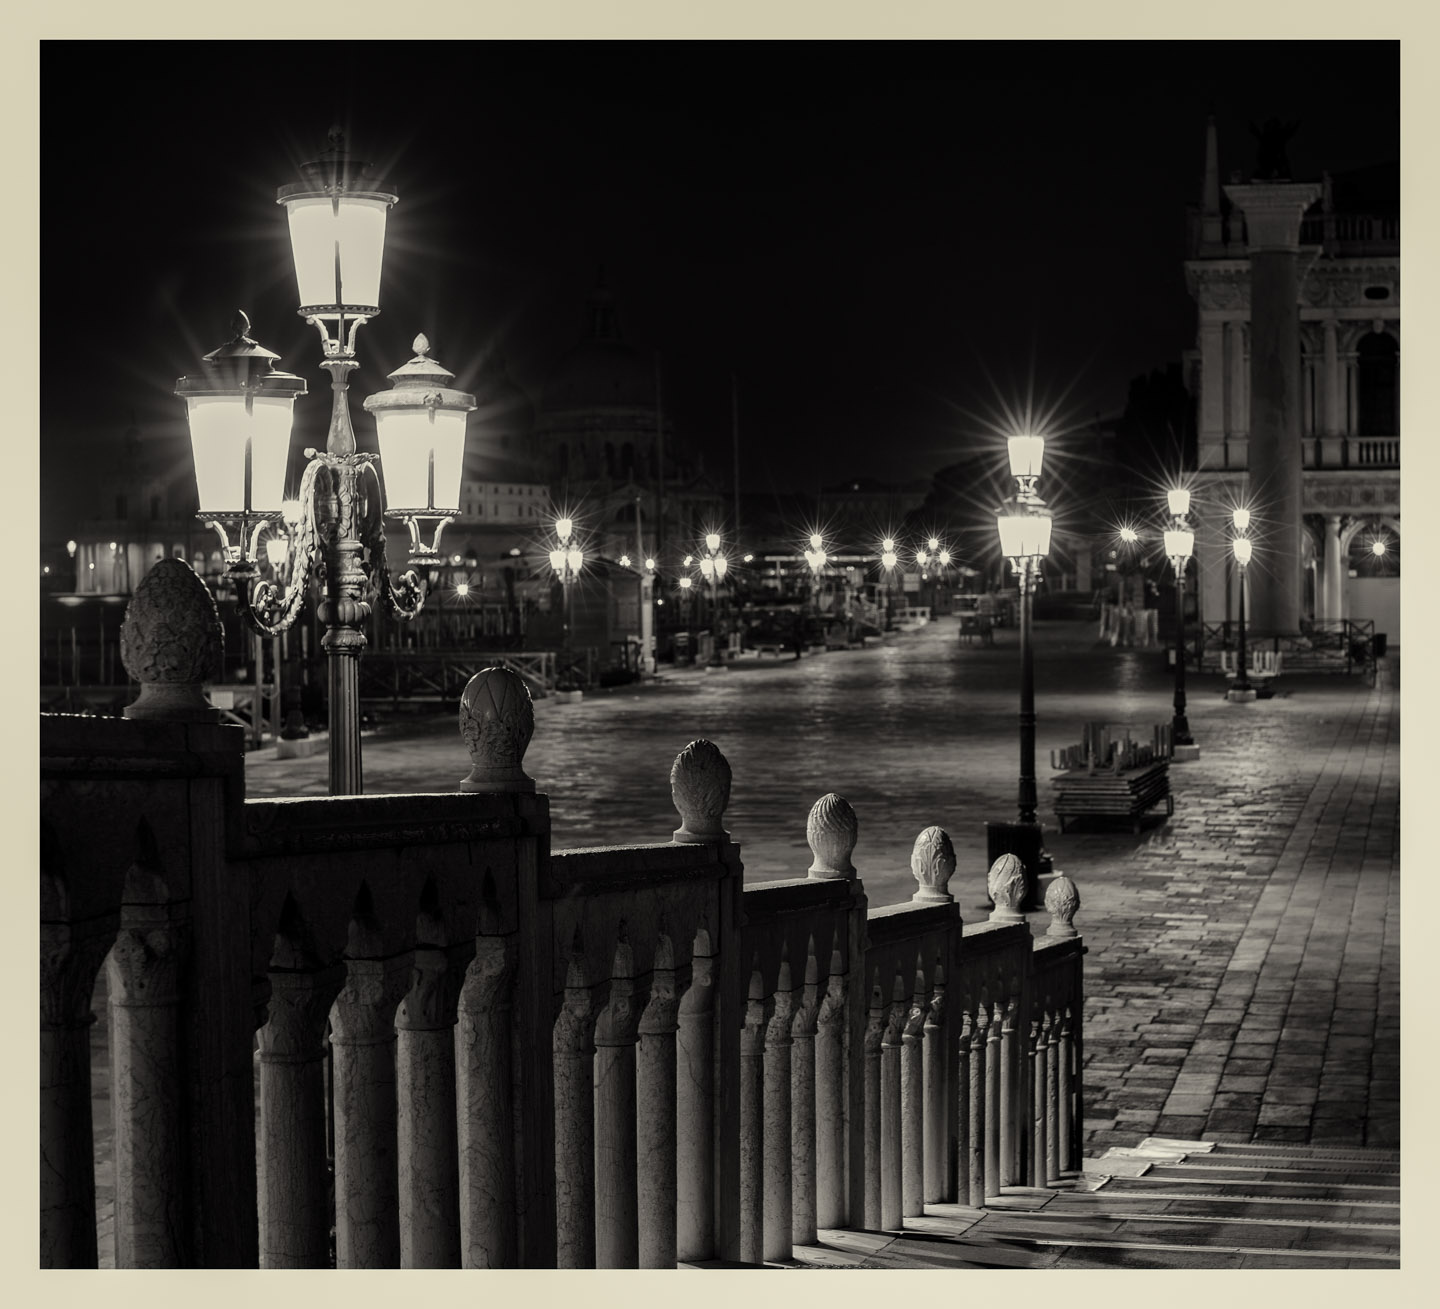 Venice Available Light (2015) | David Ringel Photography Blog